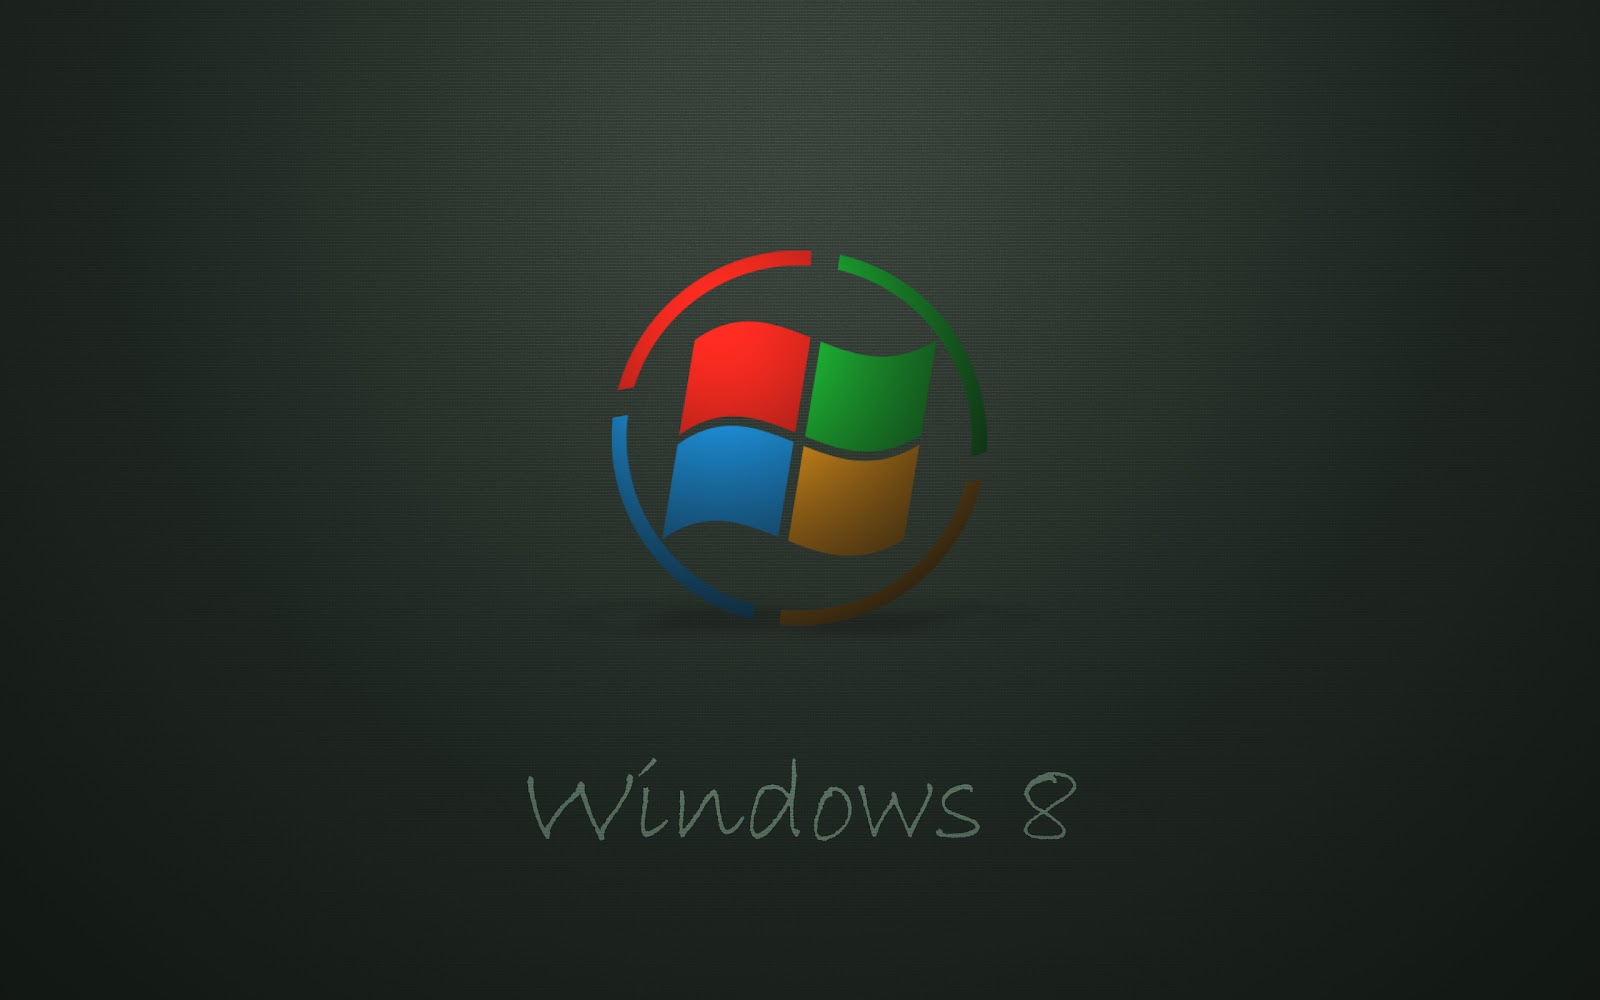 Windows 8 Wallpaper Hd For Desktop